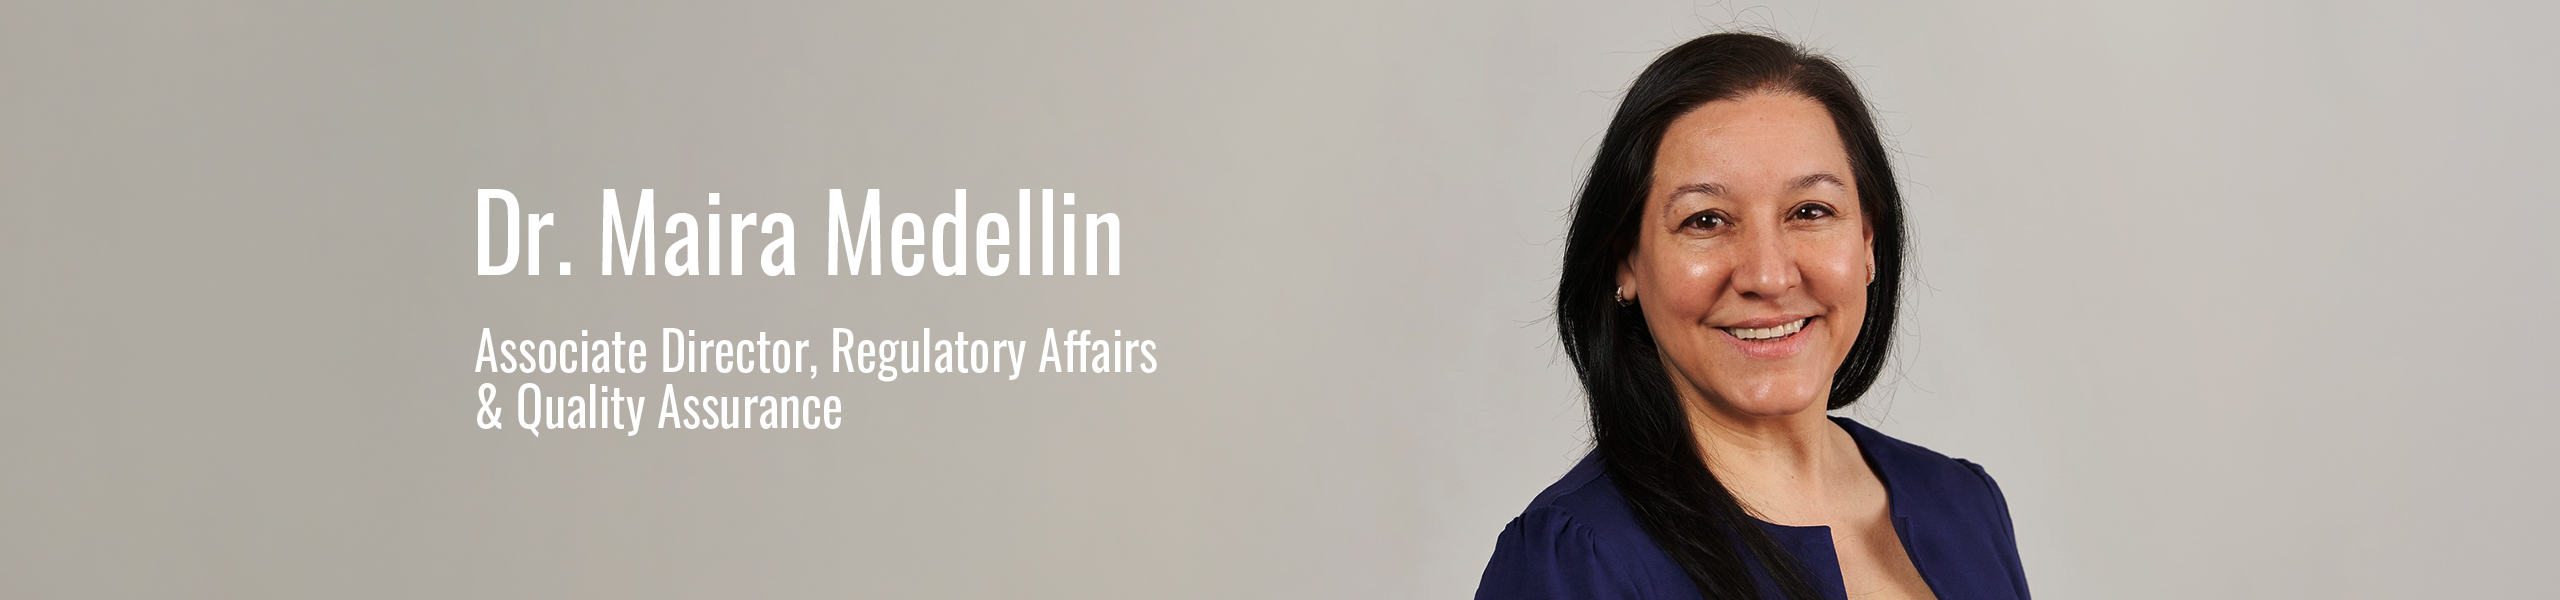 Dr. Maira Medellin: Associate Director, Regulatory Affairs & Quality Assurance